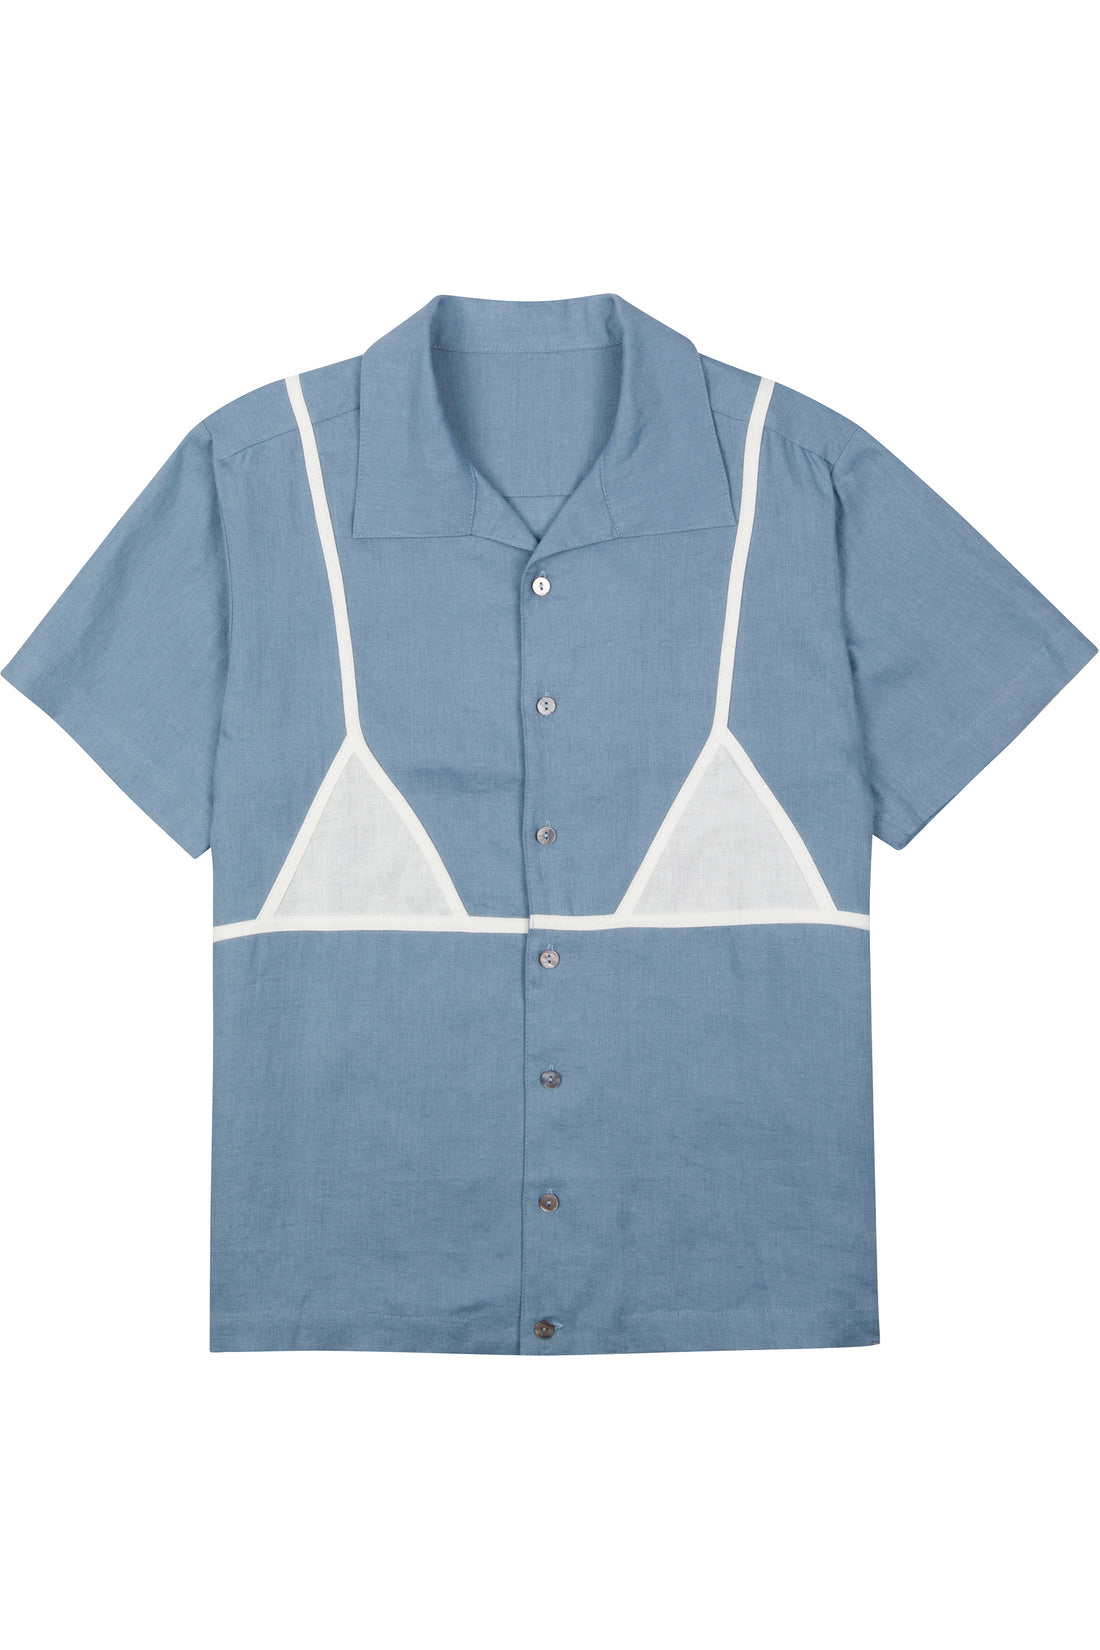 Unisex Bikini Bod Linen Bowling Shirt Blue